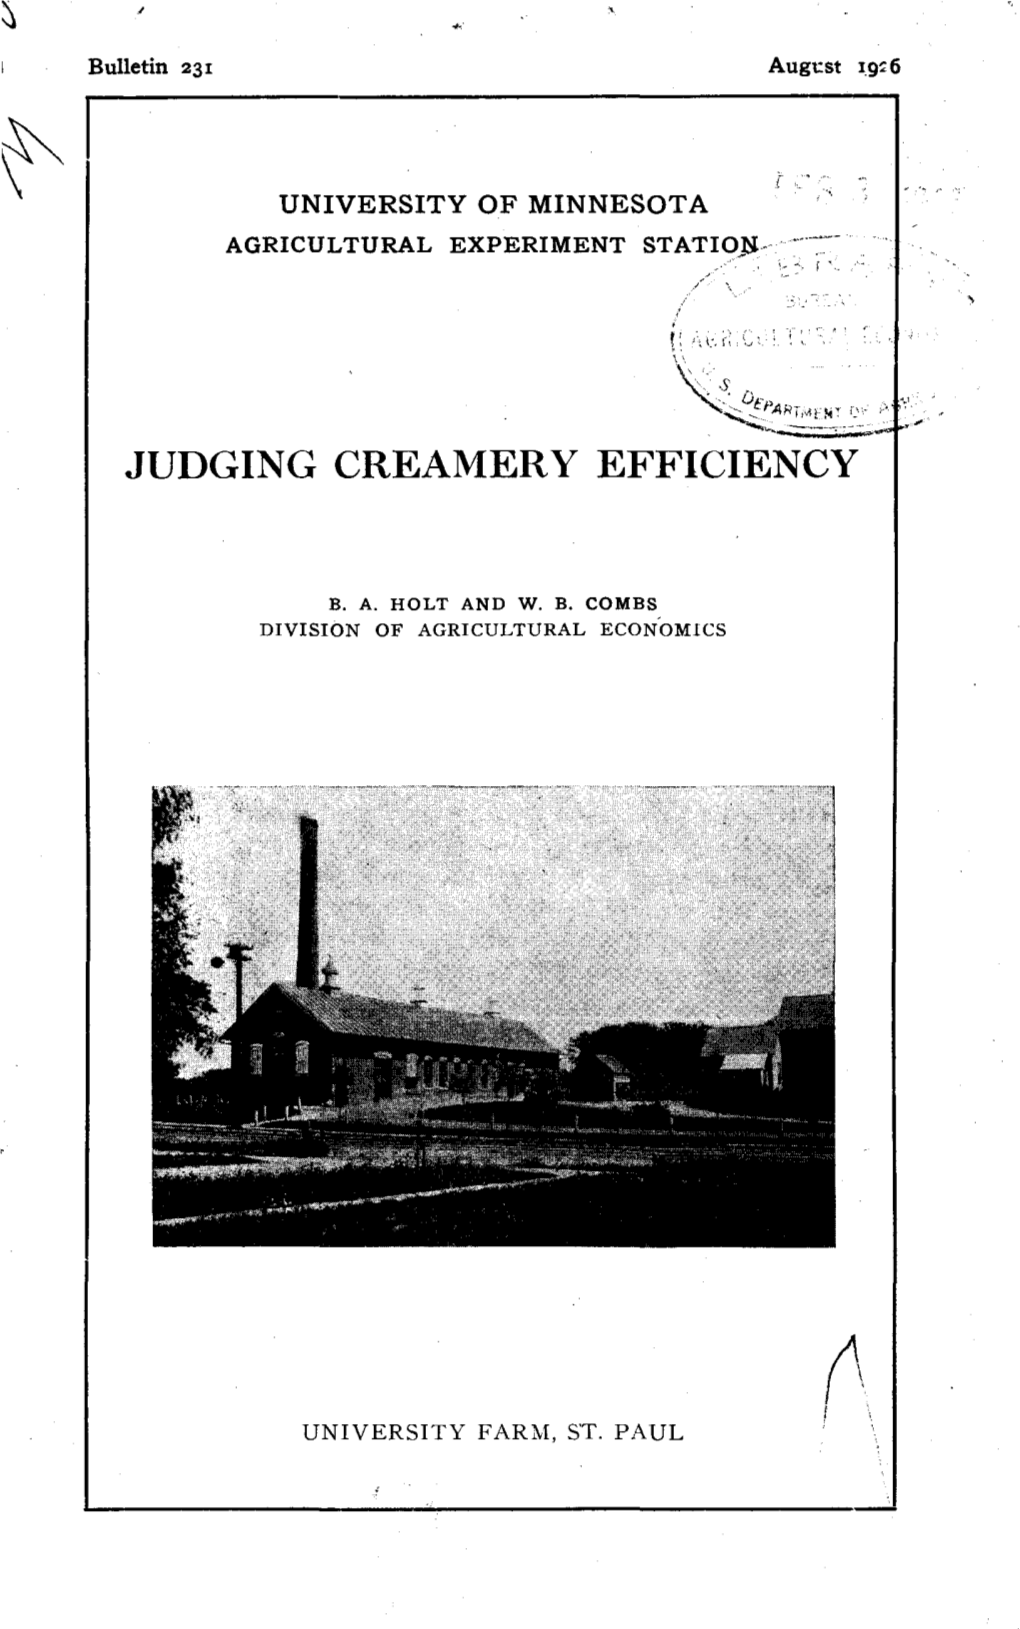 Judging Creamery Efficiency